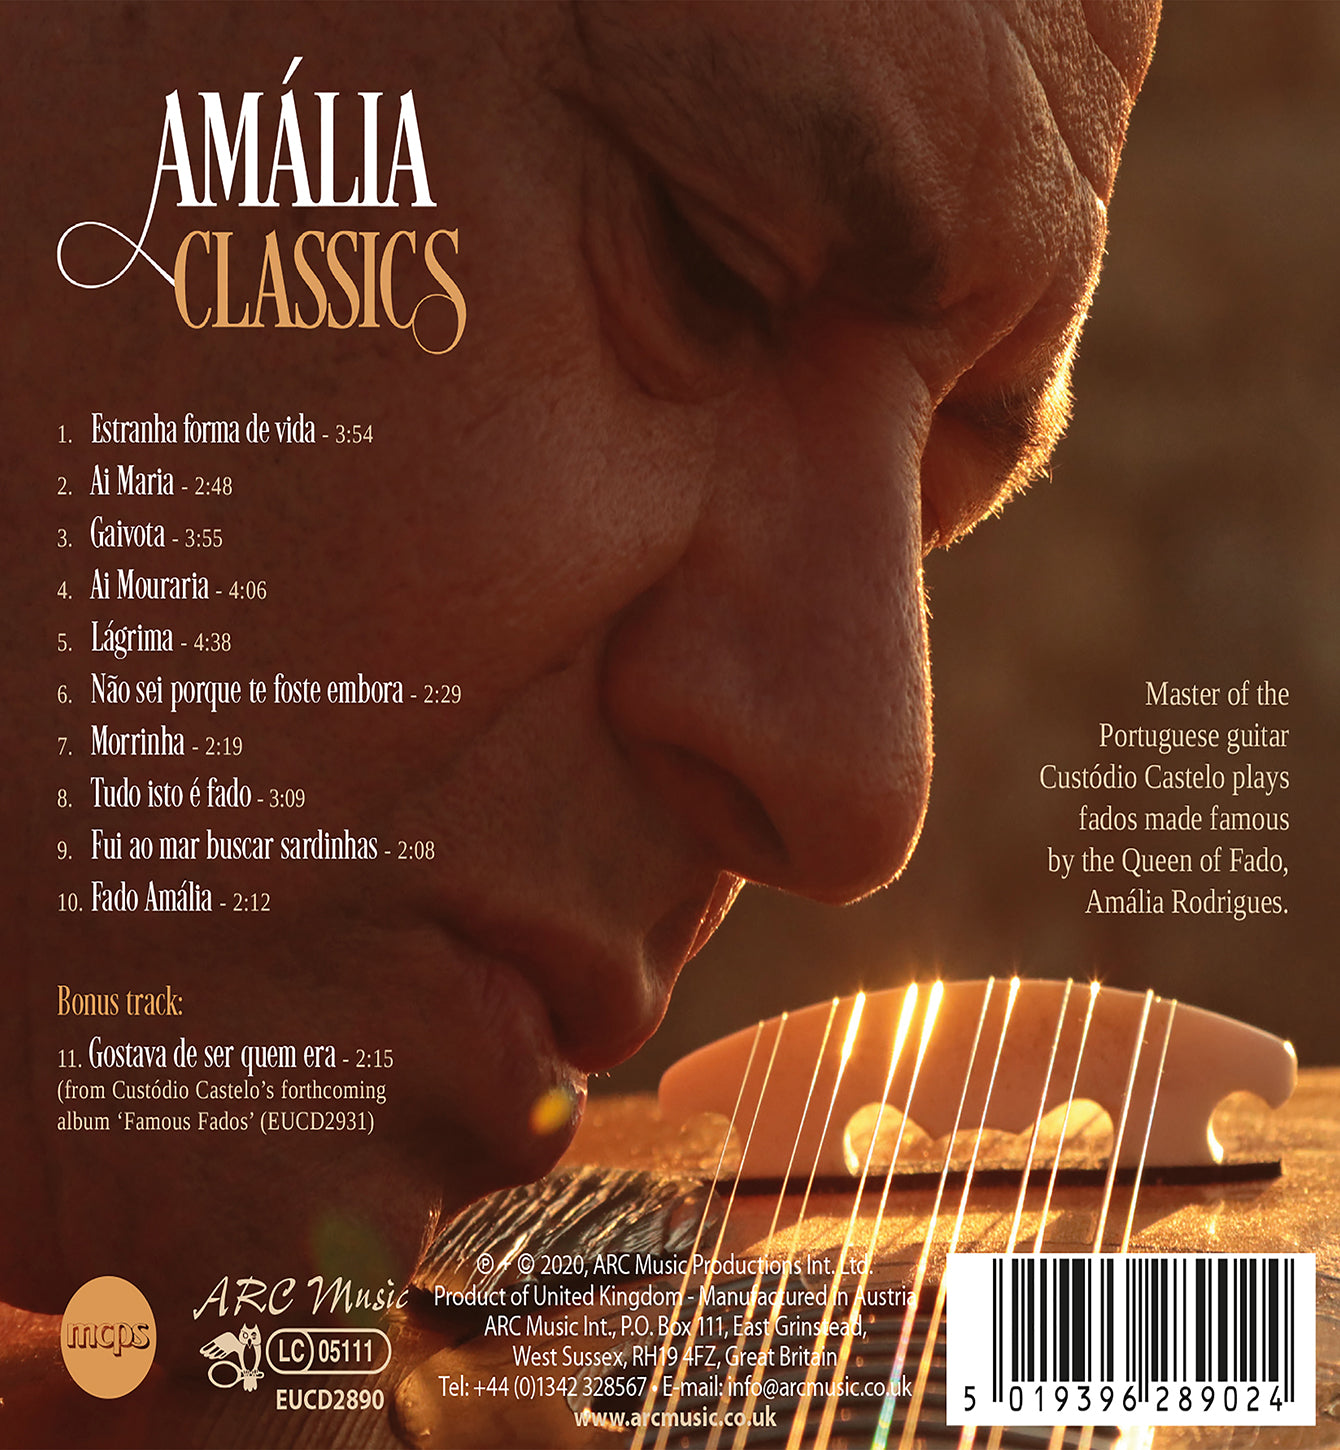 Amália Classics on Portuguese Guitar